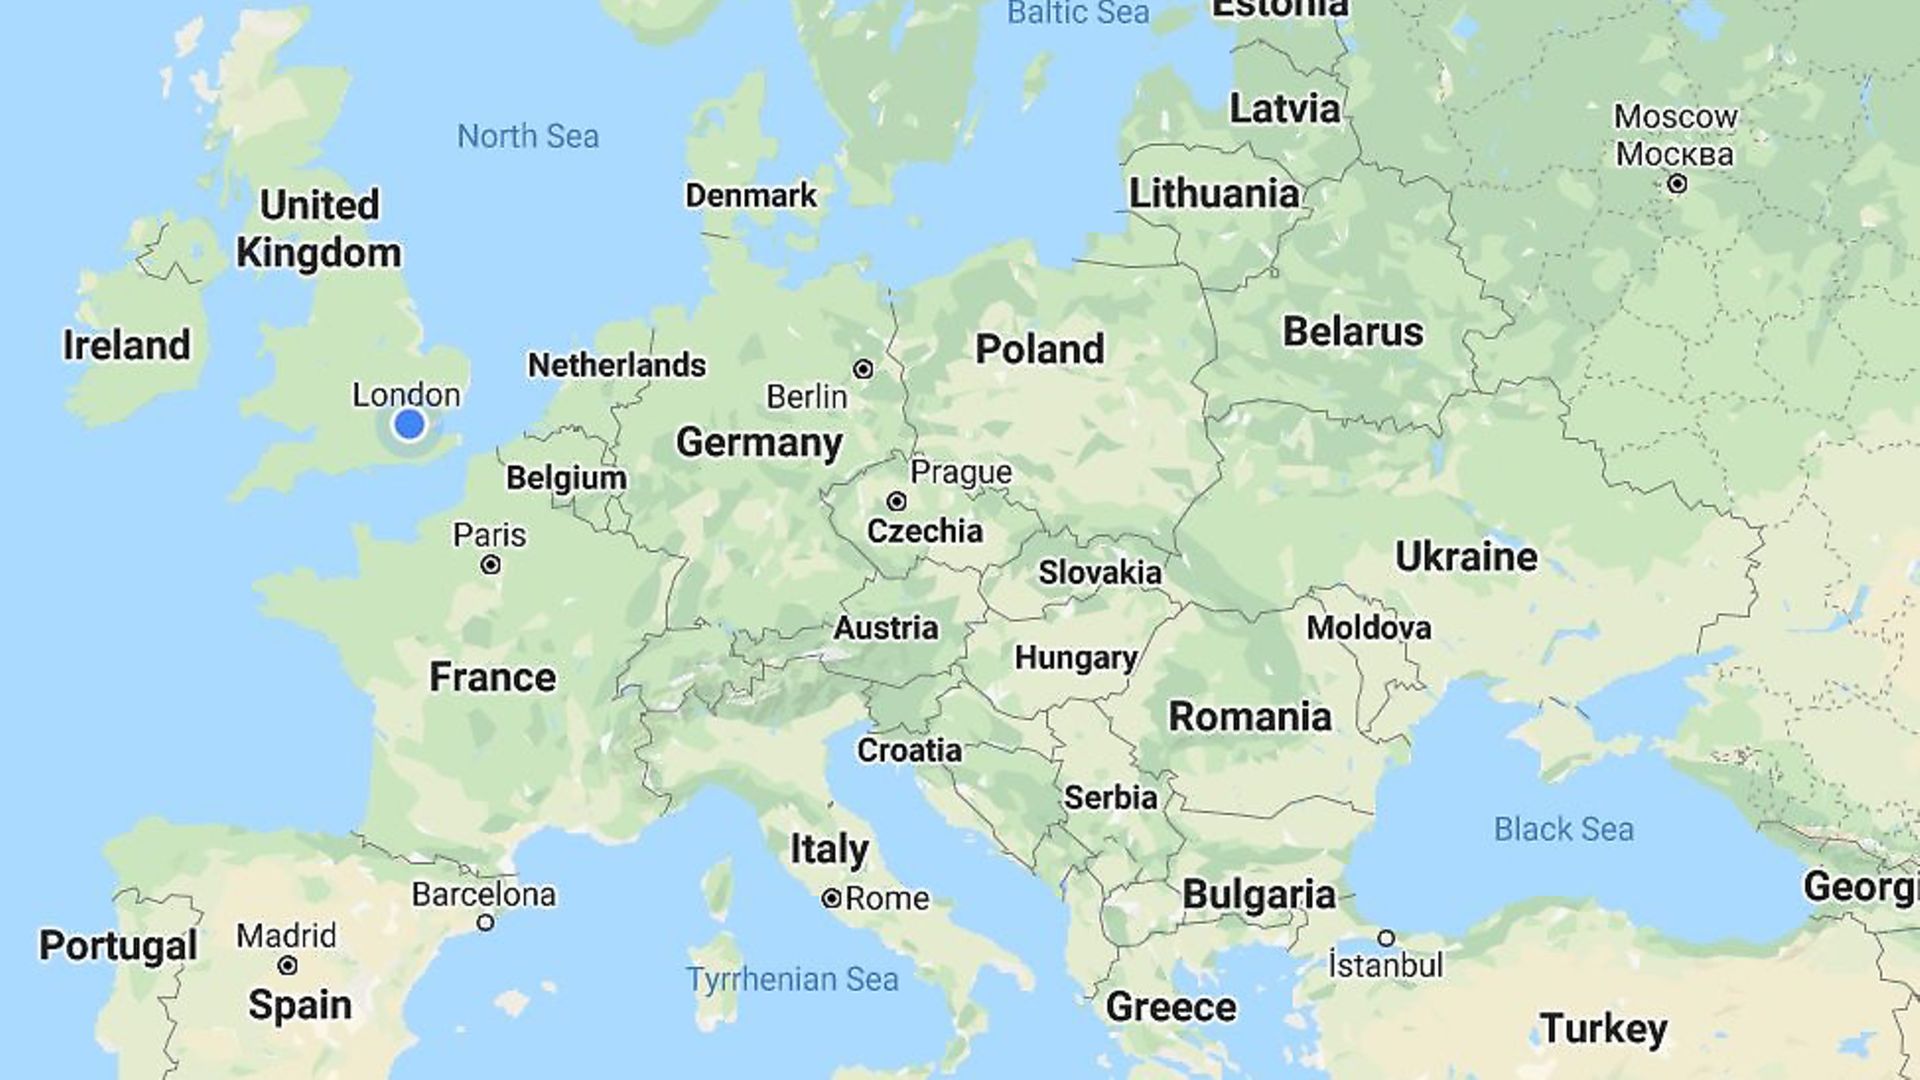 Беларусь местоположение. Белоруссия на карте Европы. Республика Беларусь на карте Европы. Белоруссия на карте Европы схематично выделена.